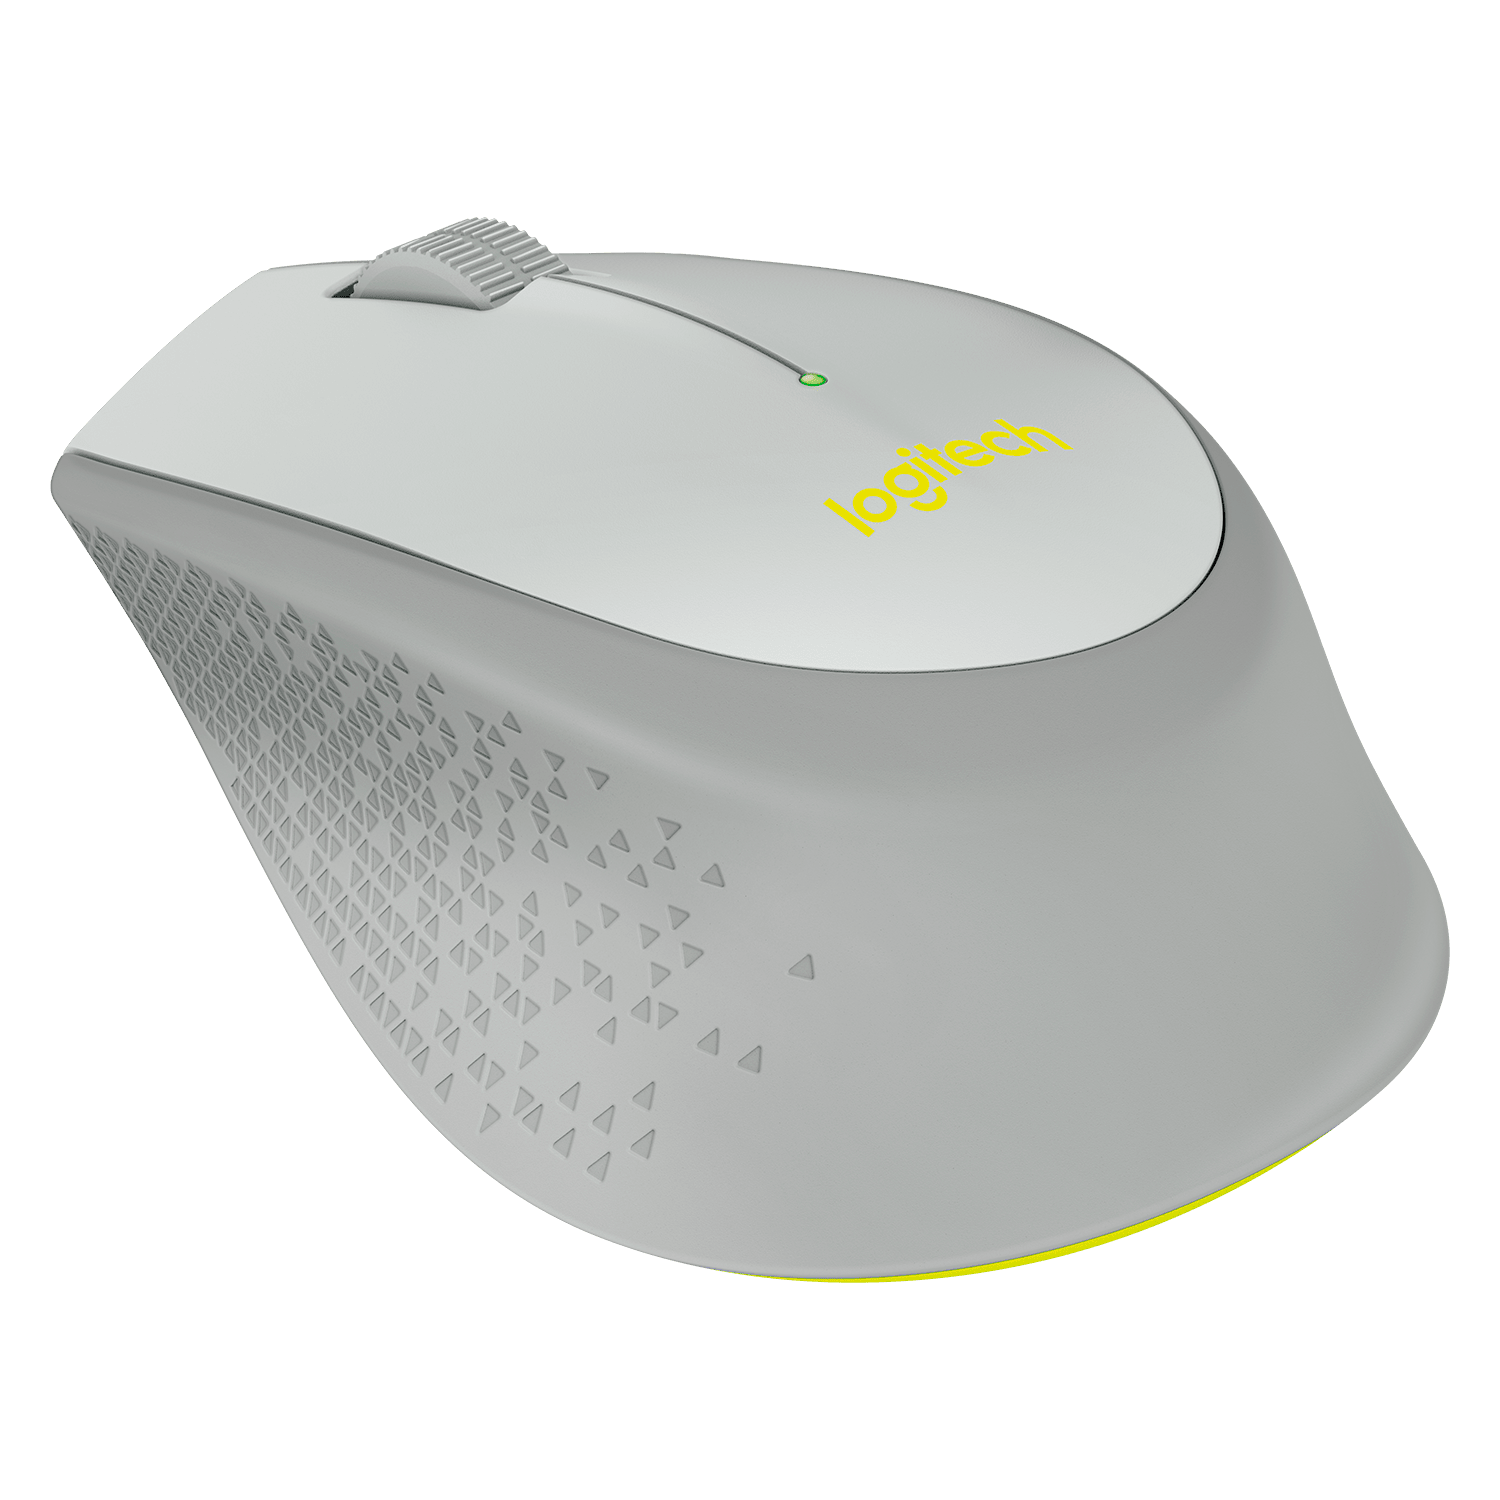 Mouse Logitech M280 Wireless Cinza